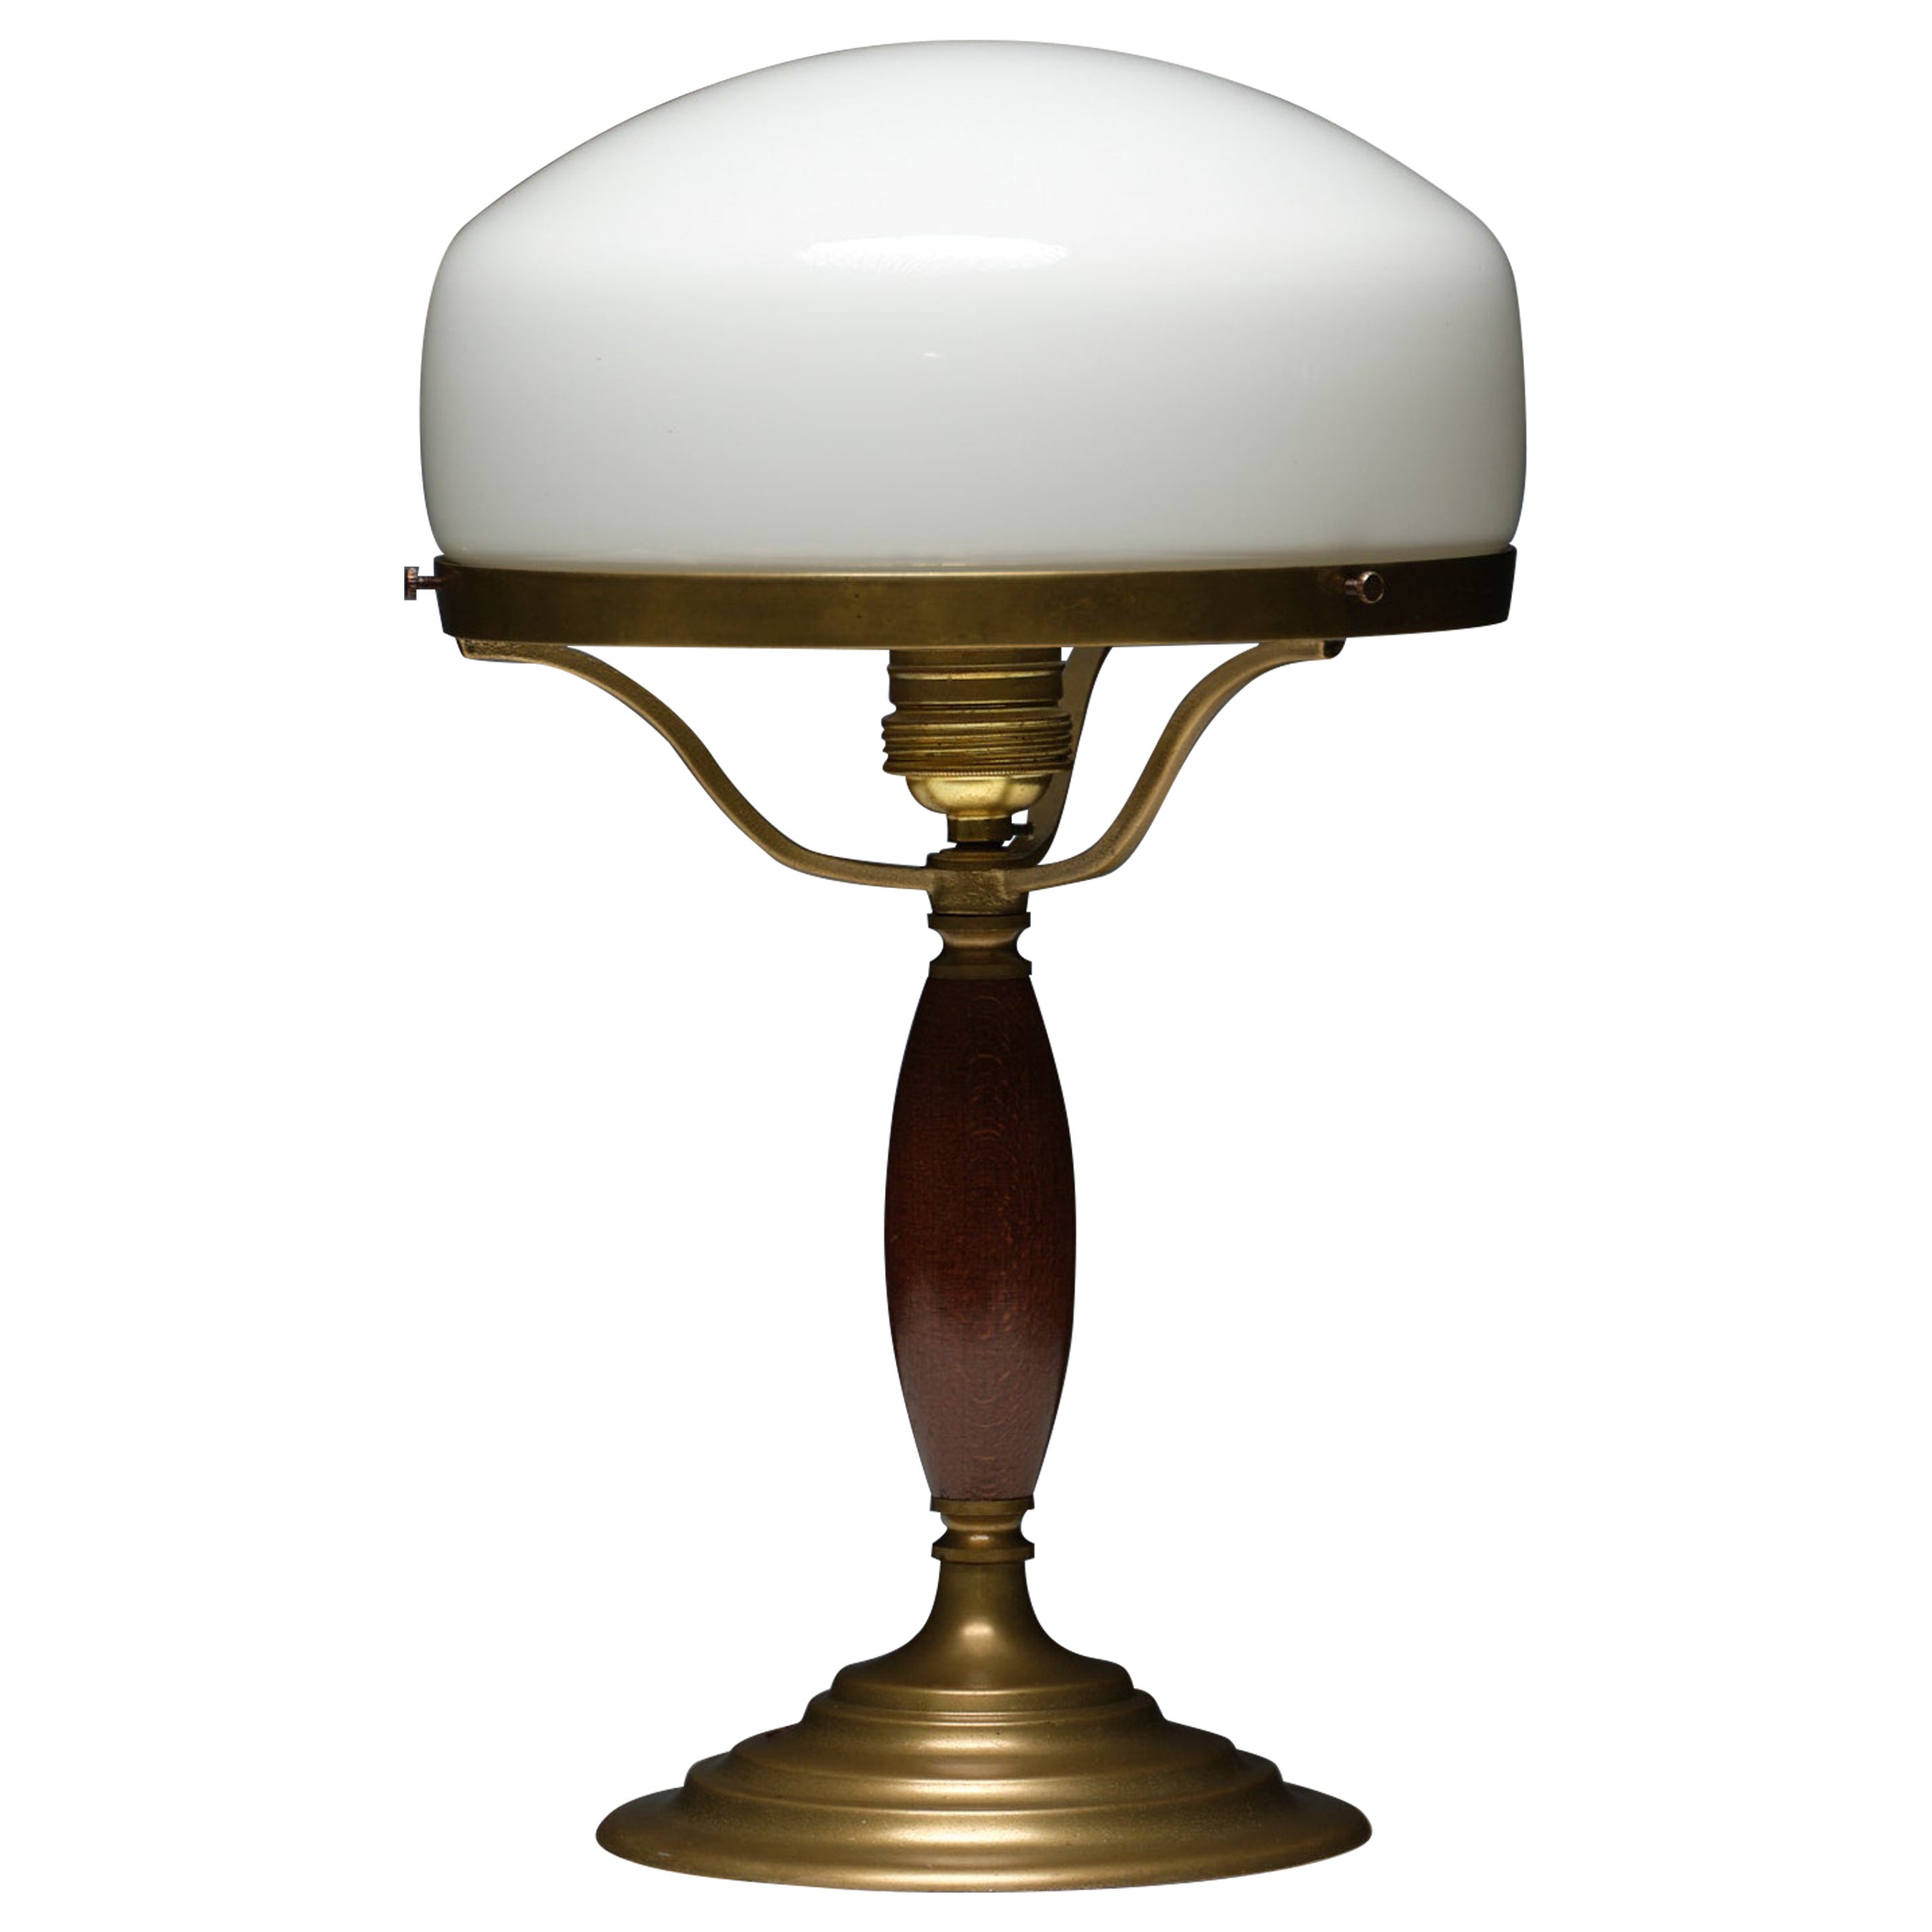 Elegant Midcentury Vintage Table Lamp - Brass Beauty with Original Patina